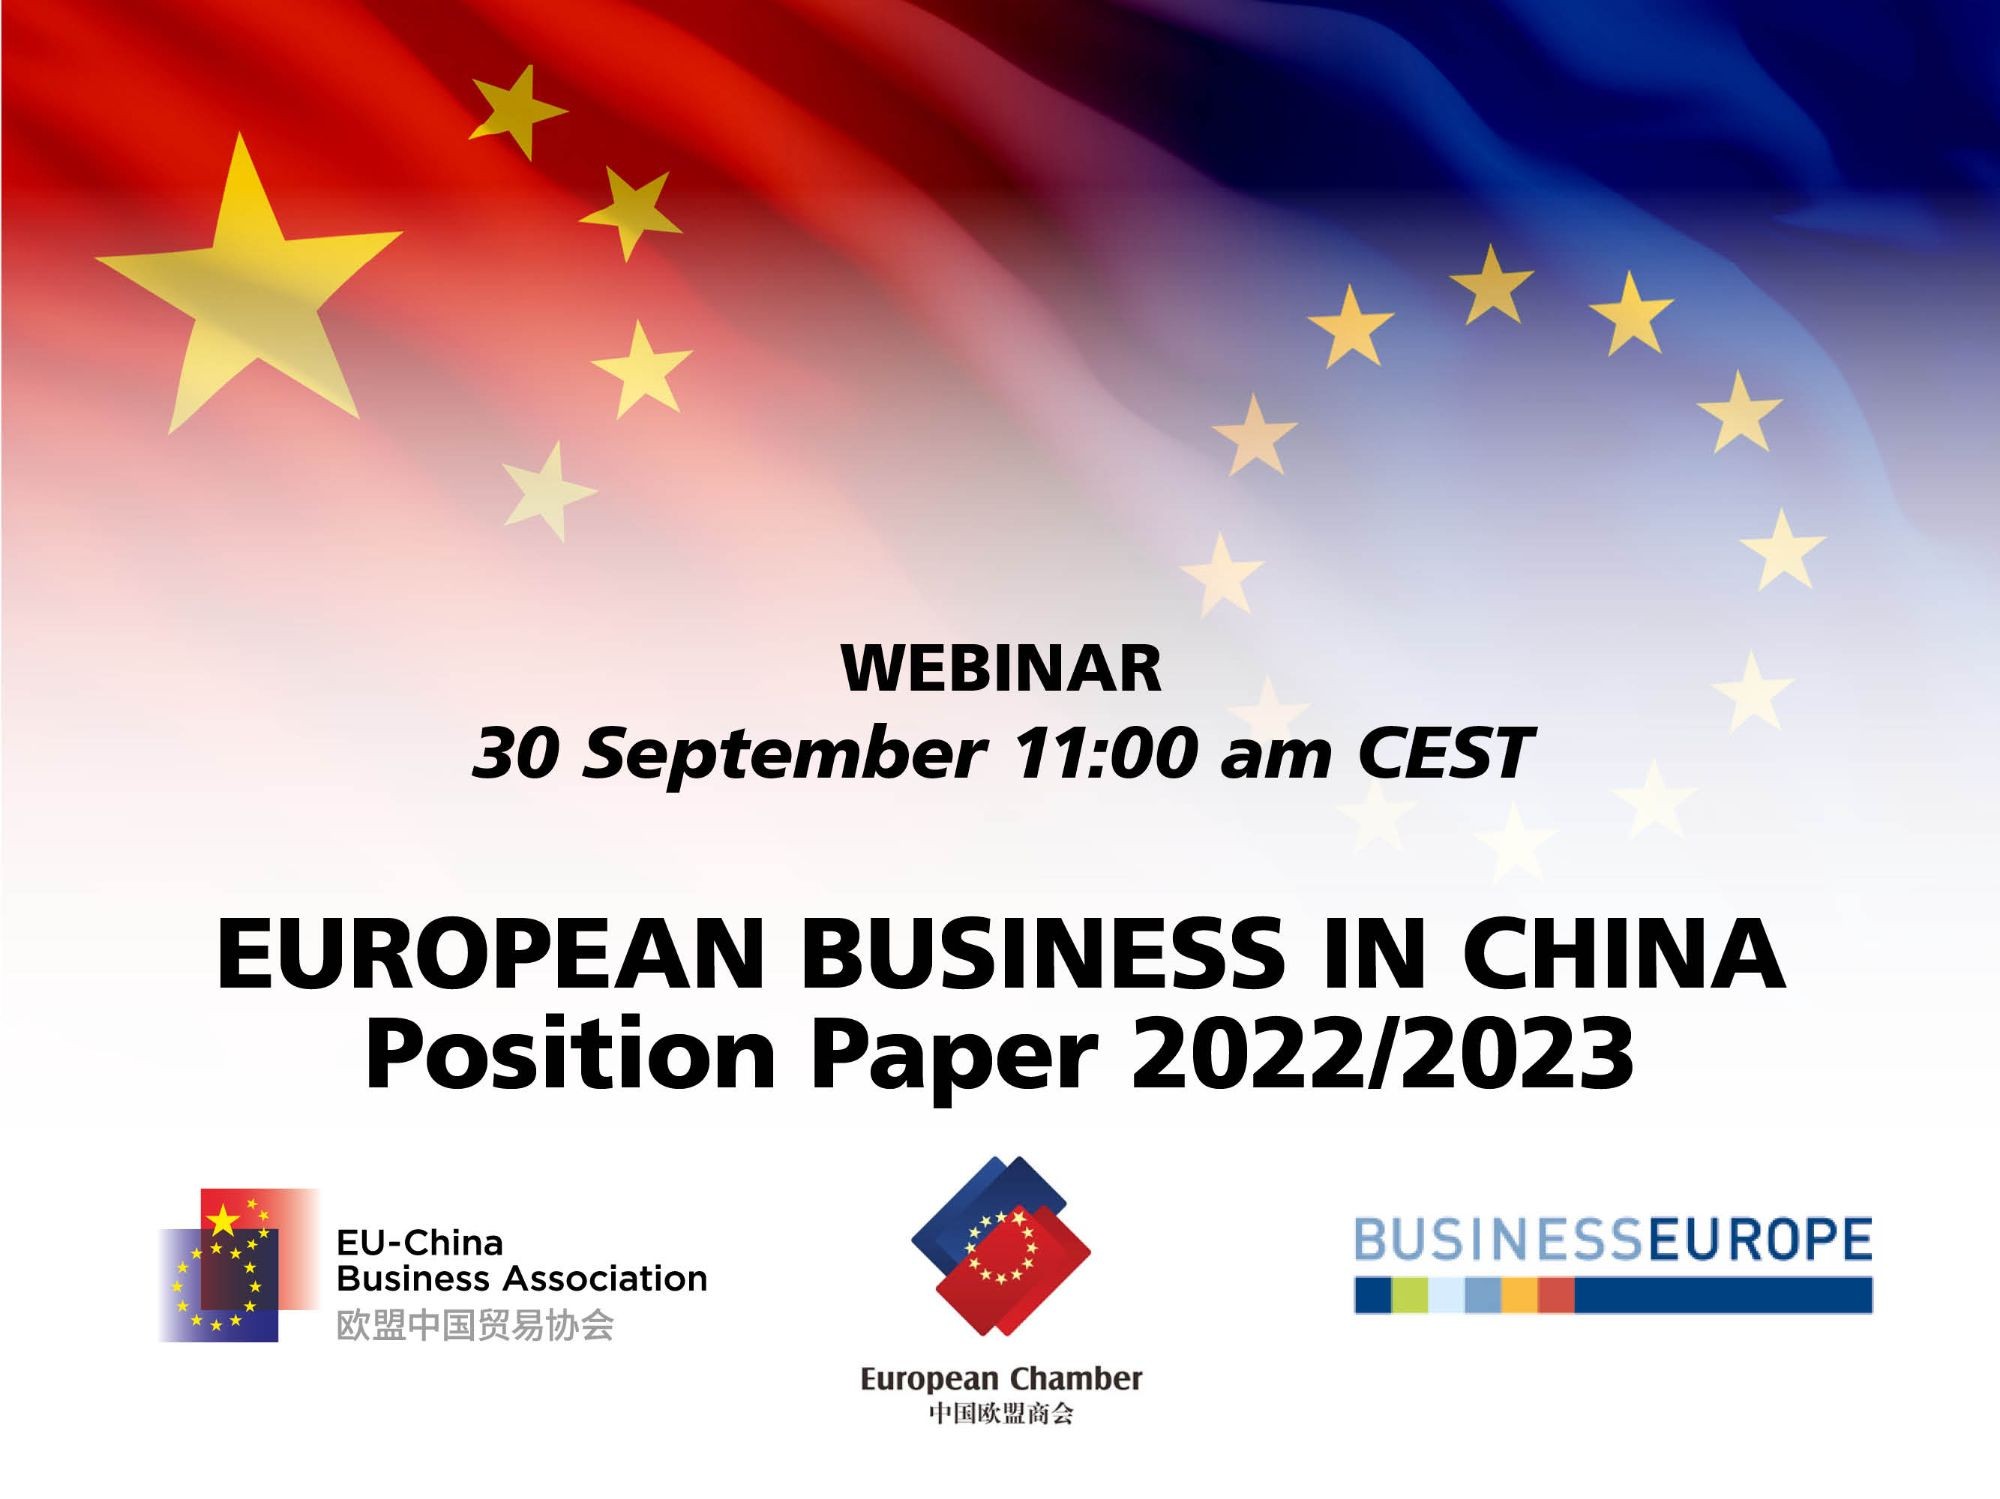 Webinar: European Business in China - Position Paper 2022/2023 - 30 September, 11:00 am CEST